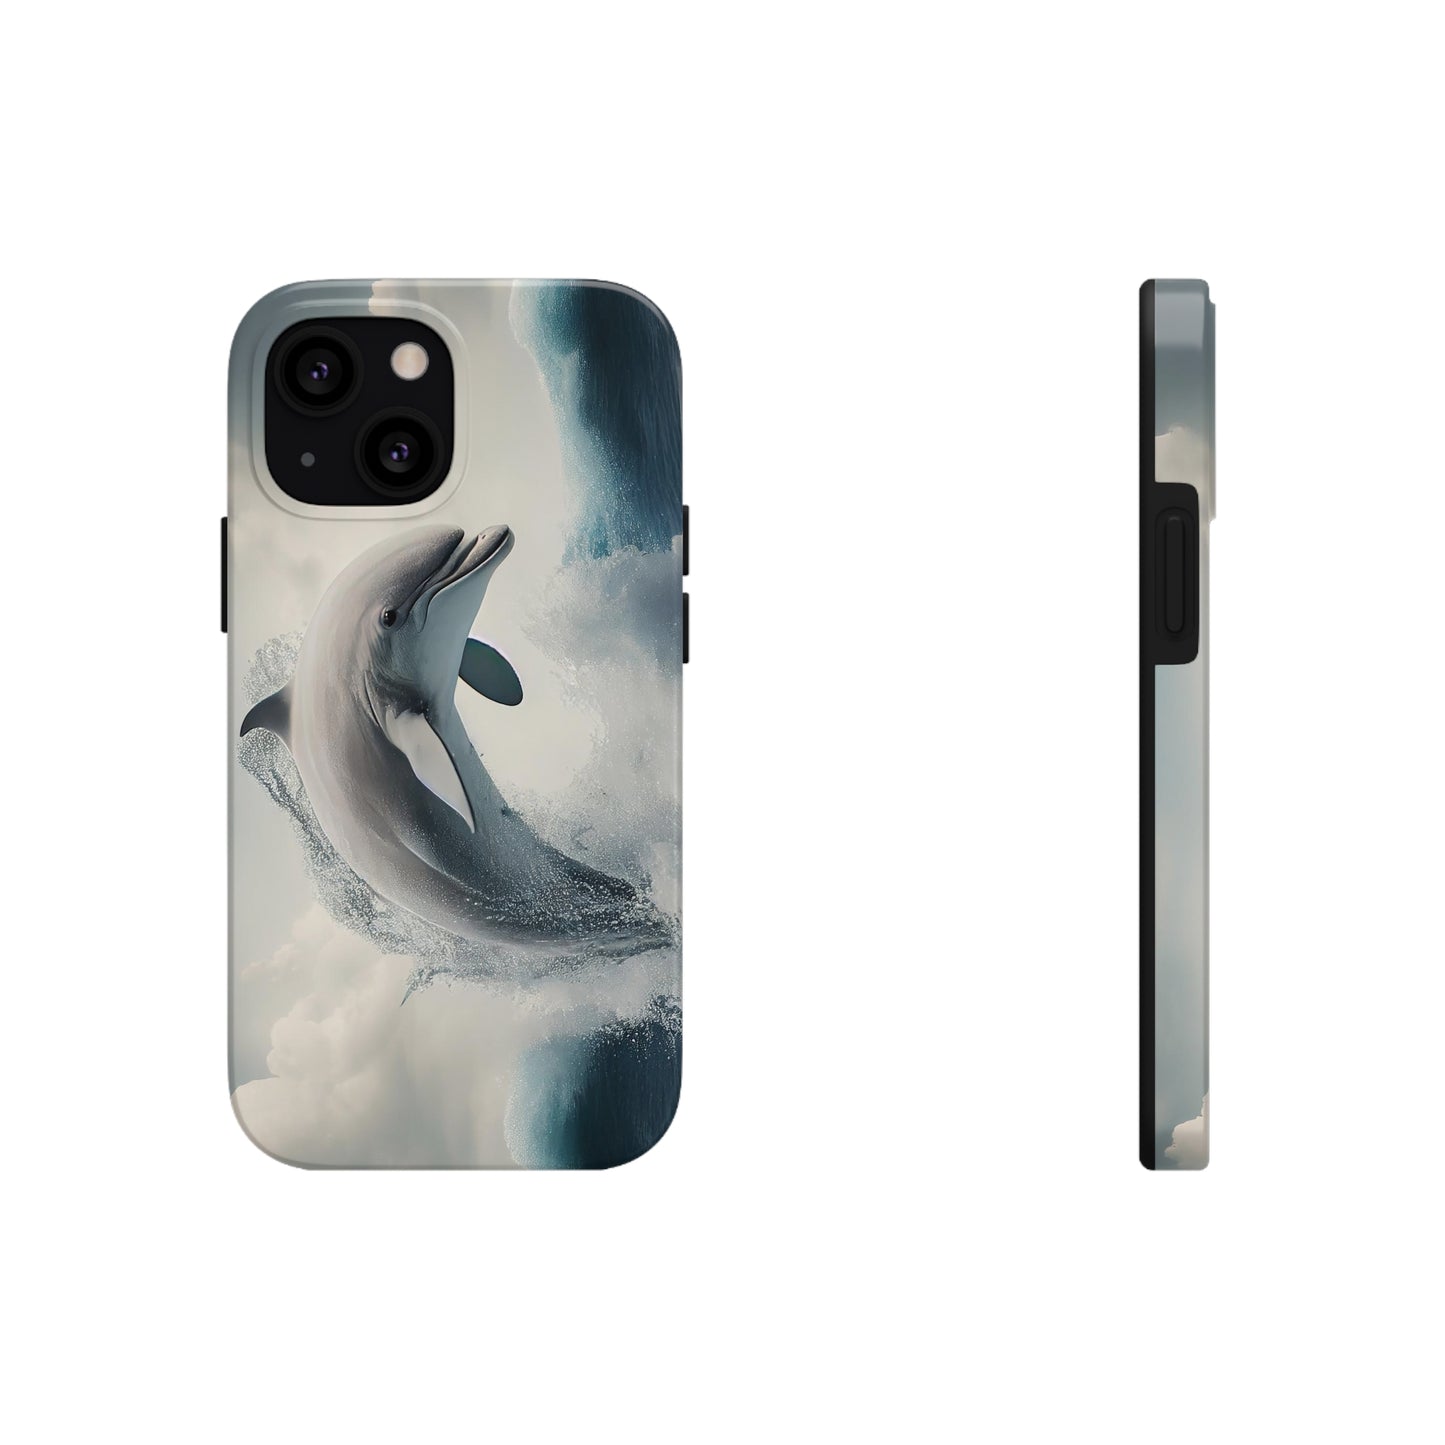 Dolphin- Tough Phone Cases